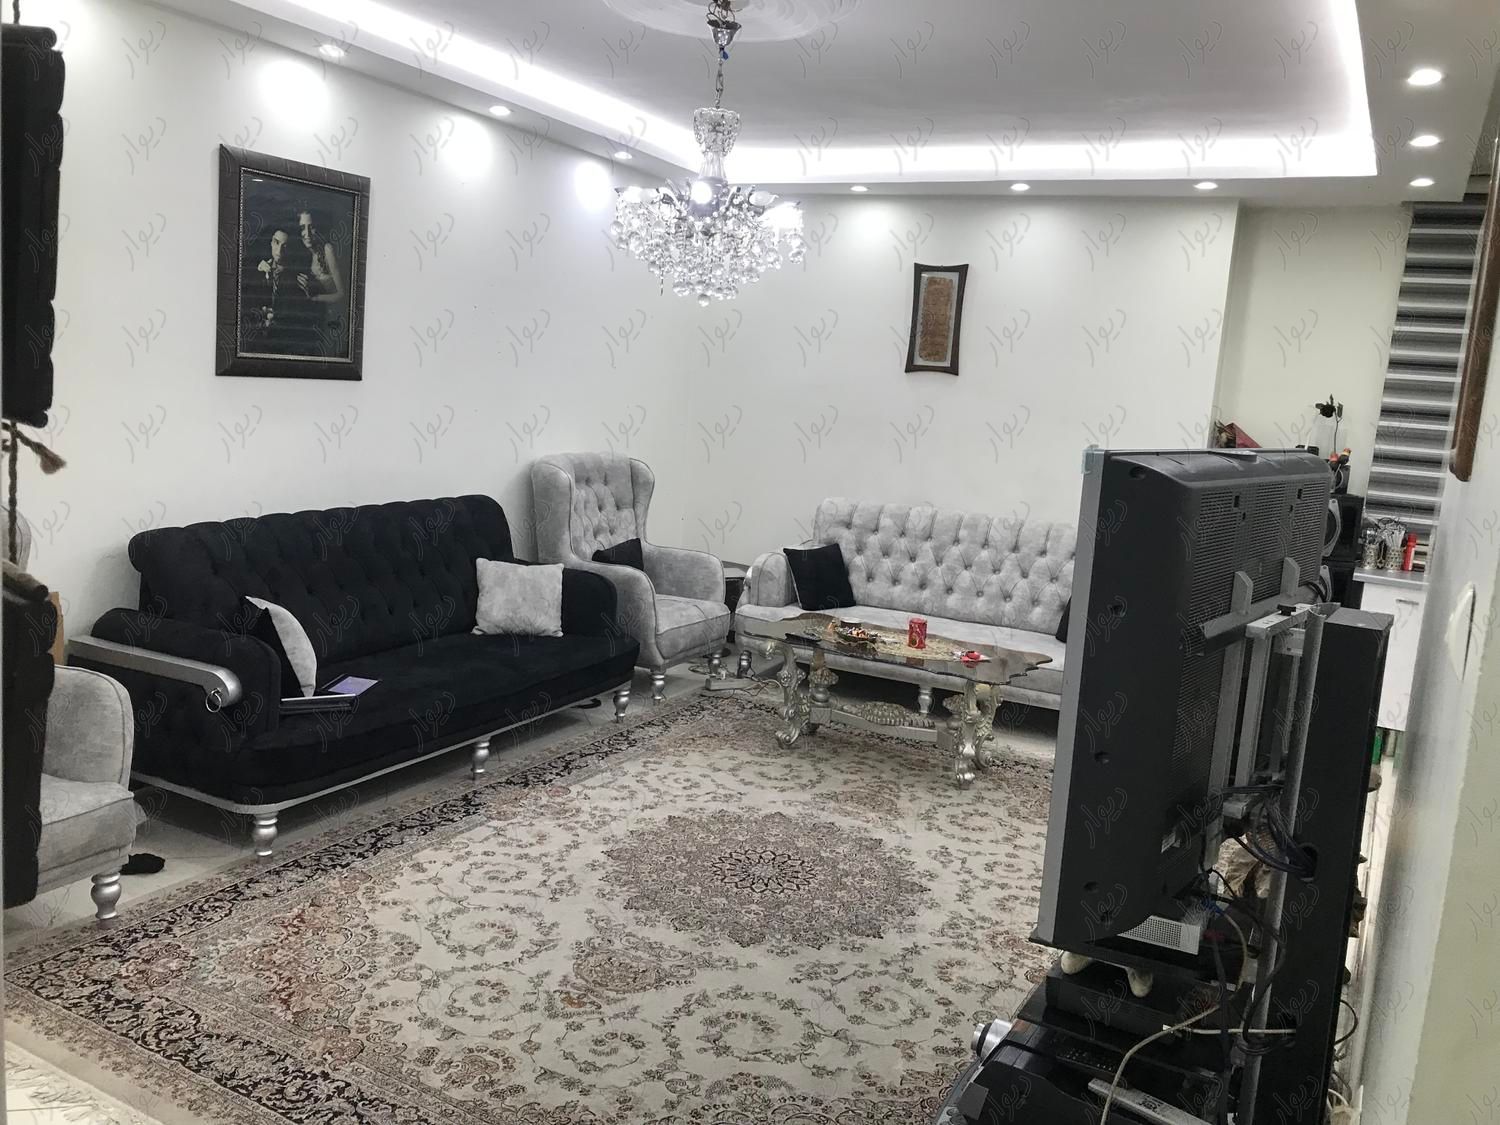 ۵۰+۱۲|اجارهٔ آپارتمان|تهران, آهنگ|دیوار